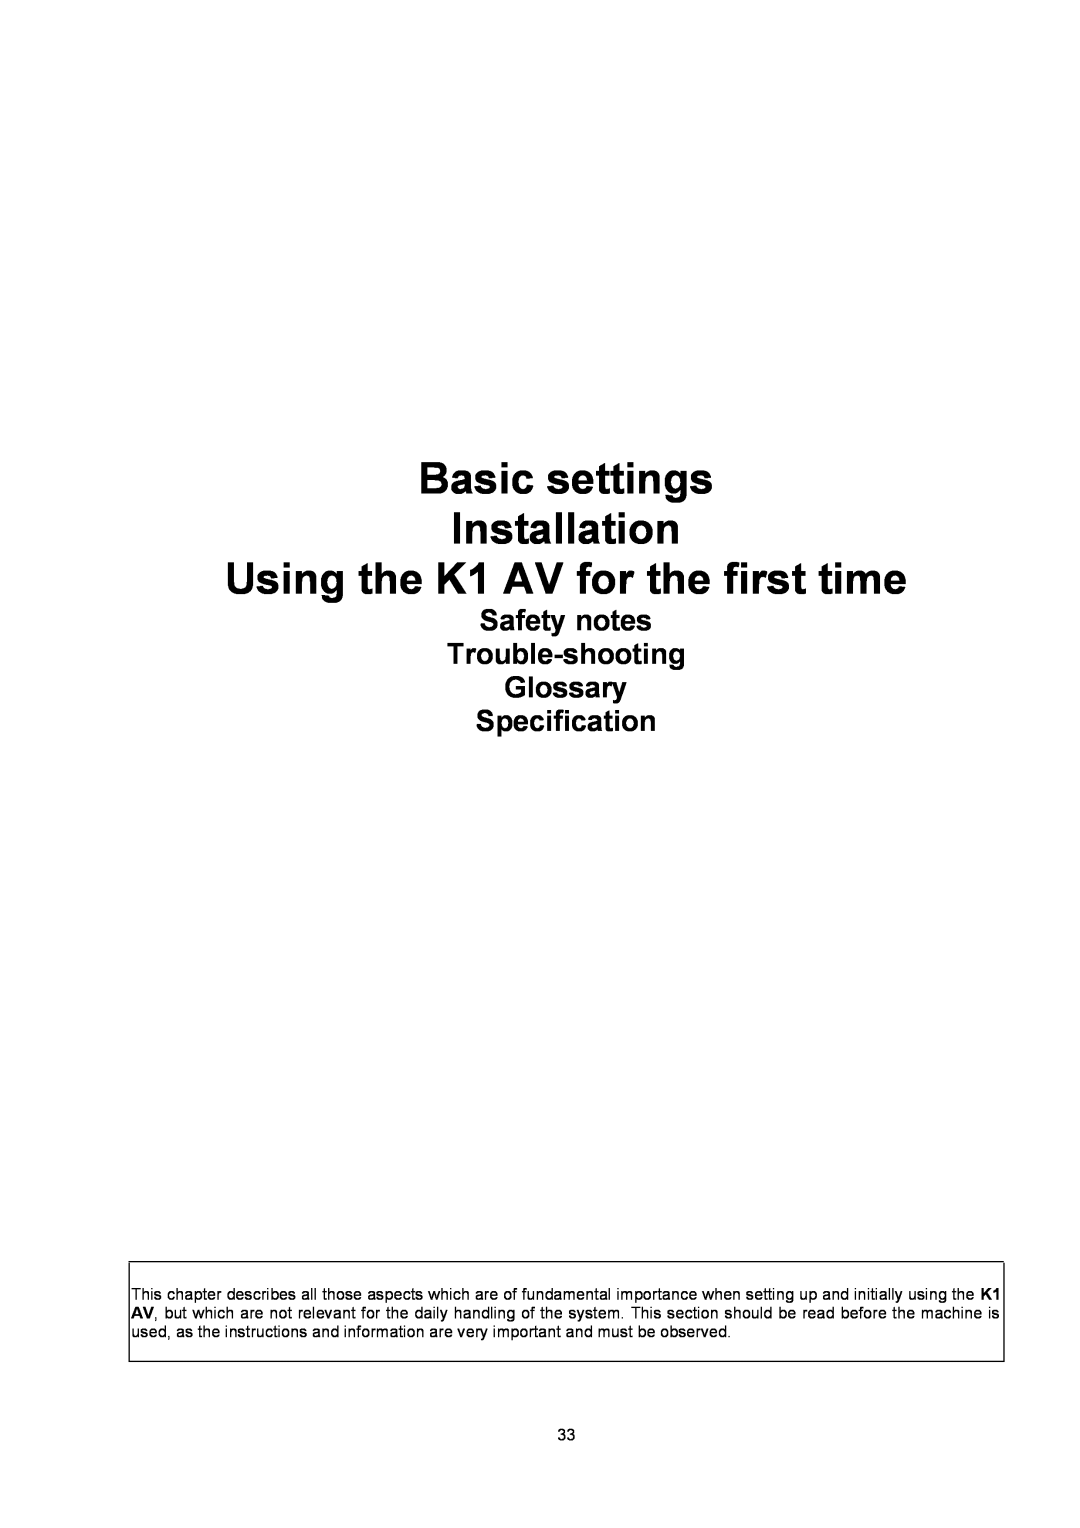 T+A Elektroakustik K1 AV user manual Safety notes Trouble-shooting Glossary, Specification, Basic settings Installation 